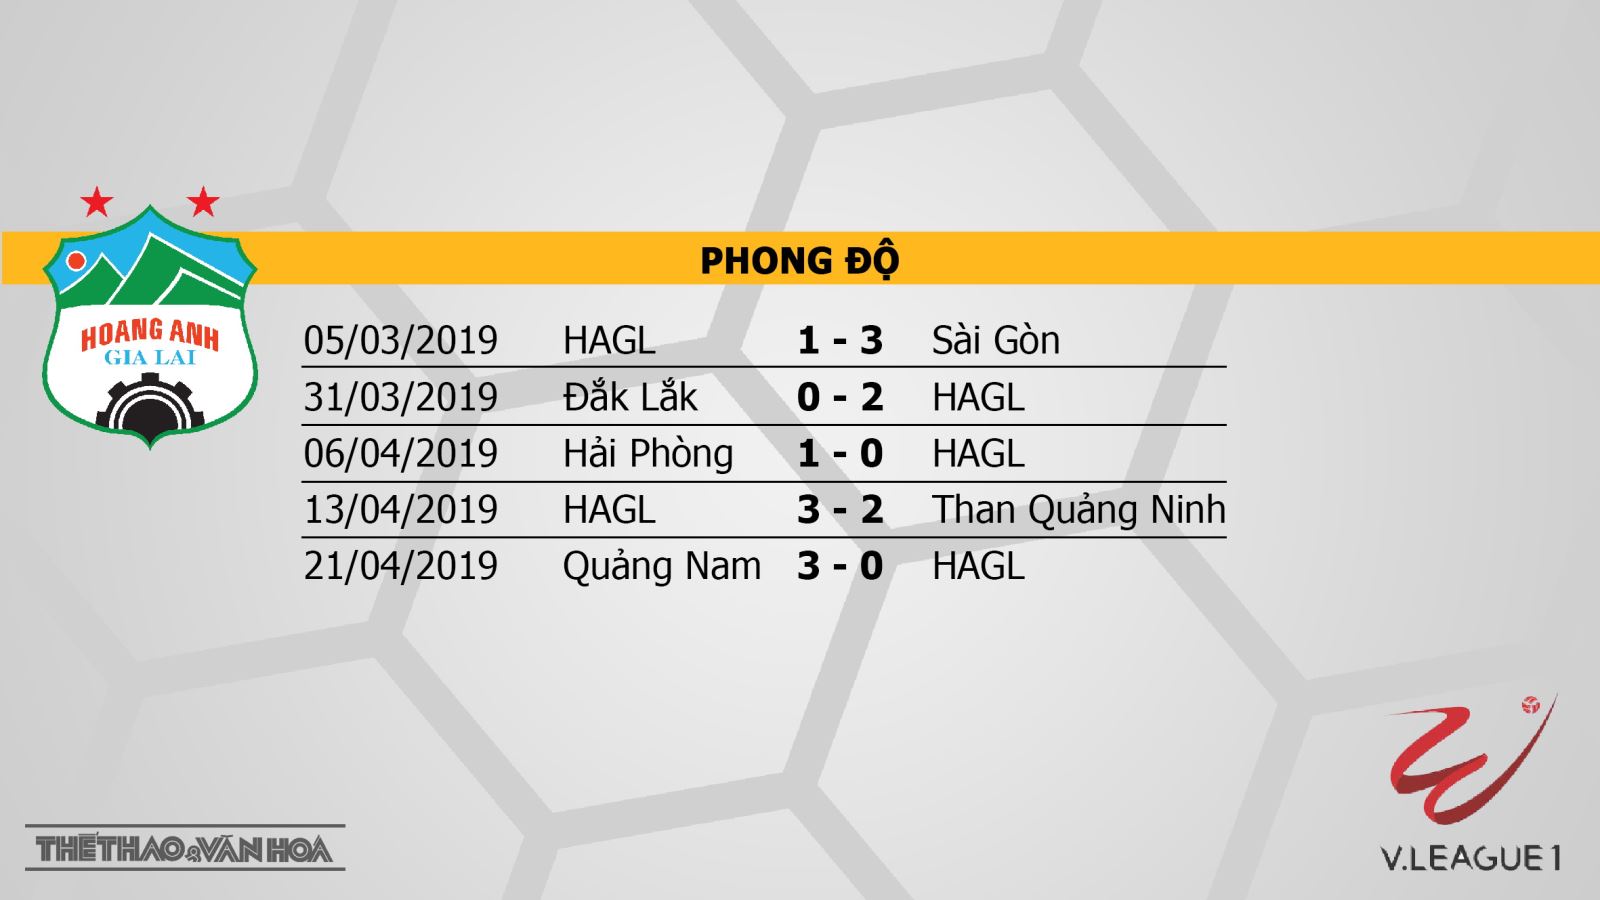 HAGL vs Thanh Hóa, Thanh Hóa, HAGL, truc tiep bong da, trực tiếp bóng đá, truc tiep HAGL, truc tiep HAGL vs Thanh Hóa, v league 2019, truc tiep v league, VTV6, BDTV, FPT